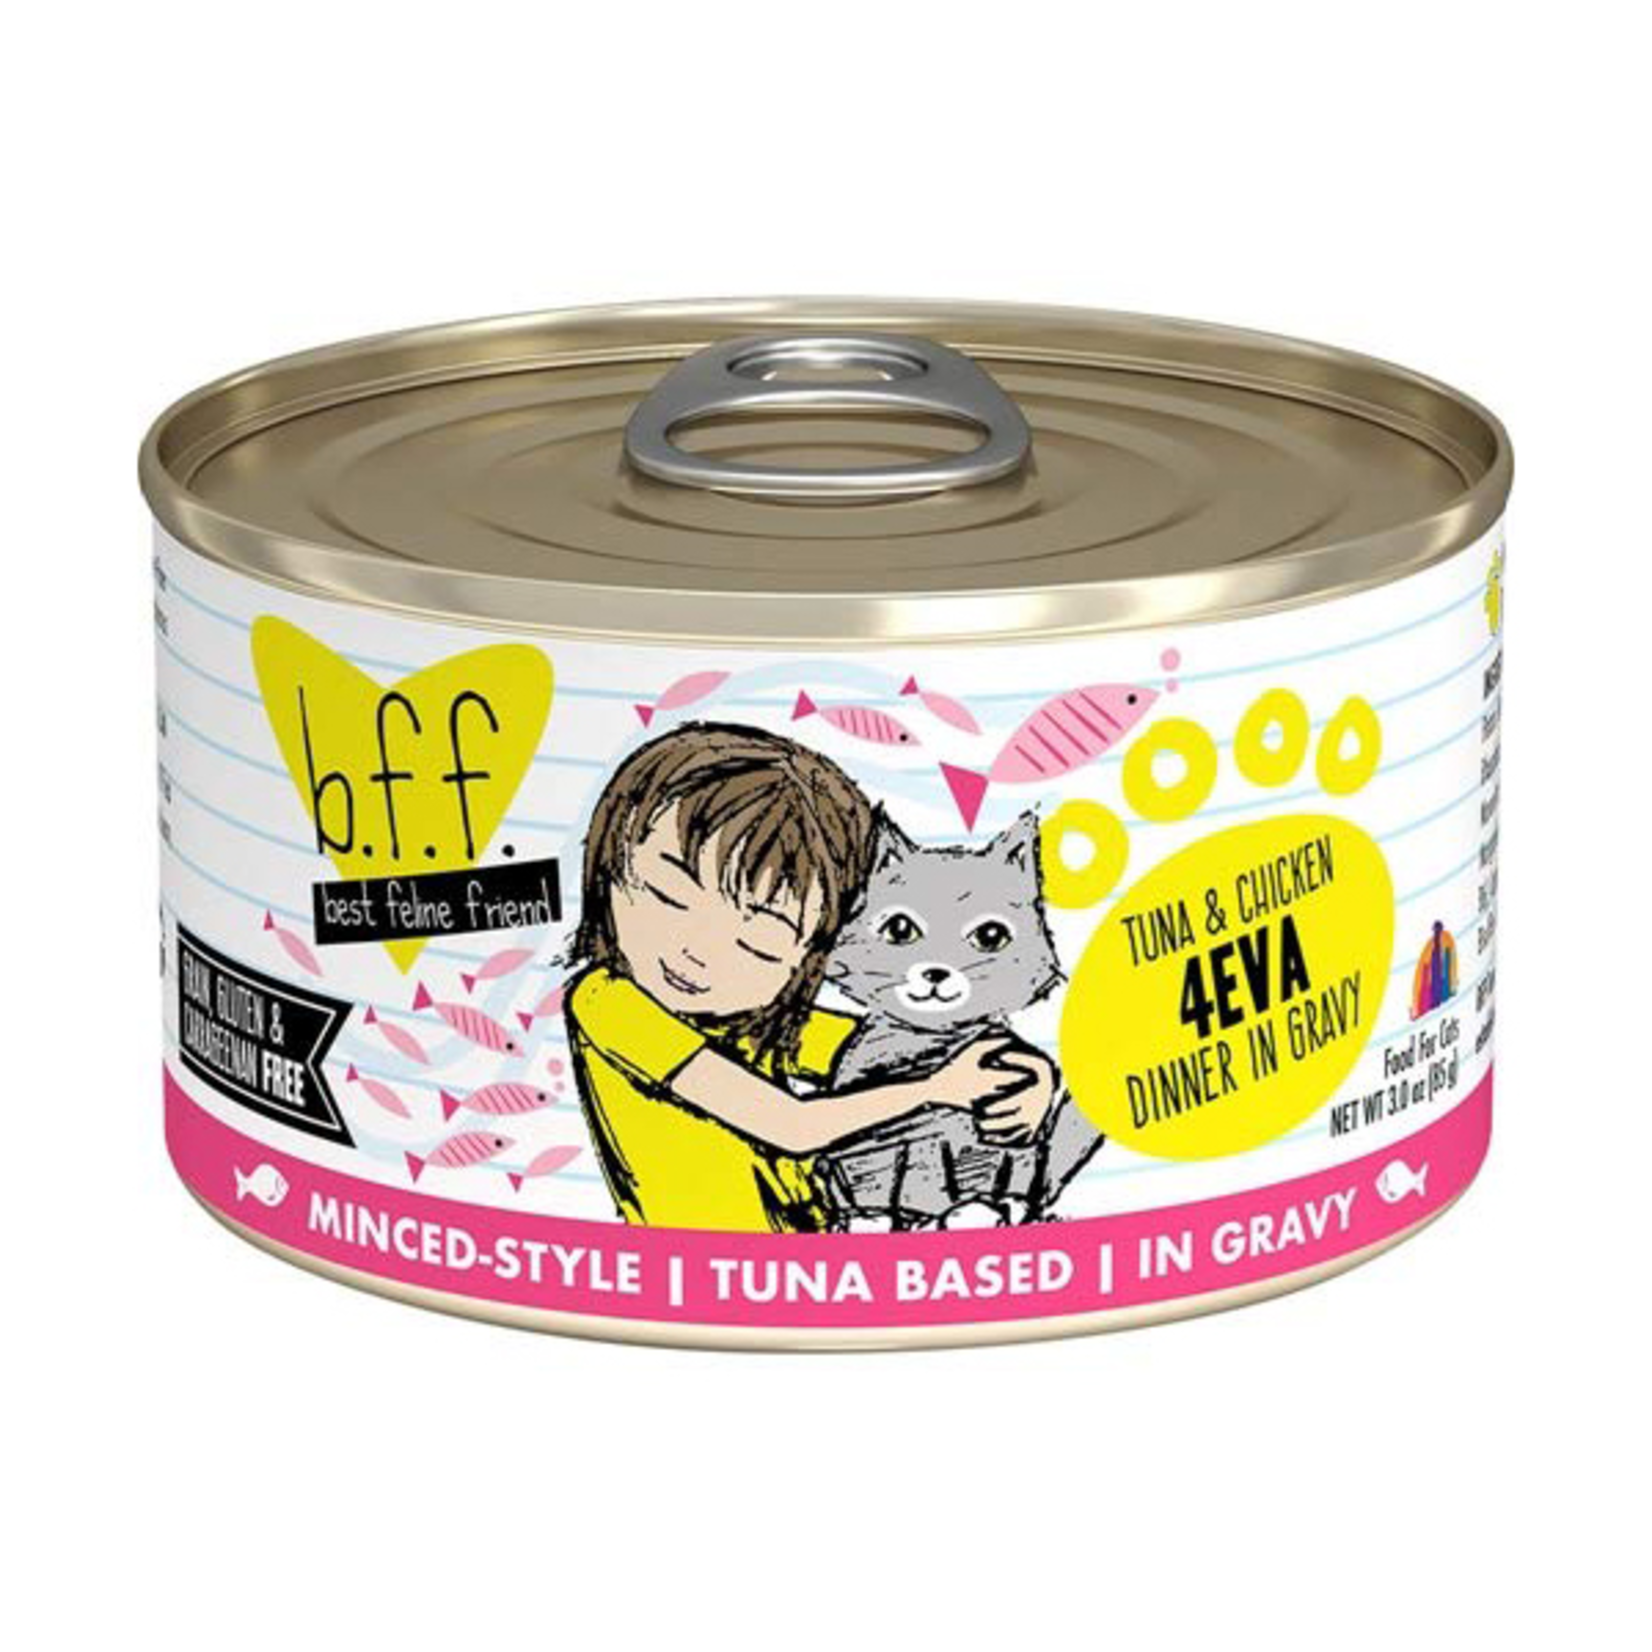 BFF Tuna & Chicken 4-Eva  3 oz